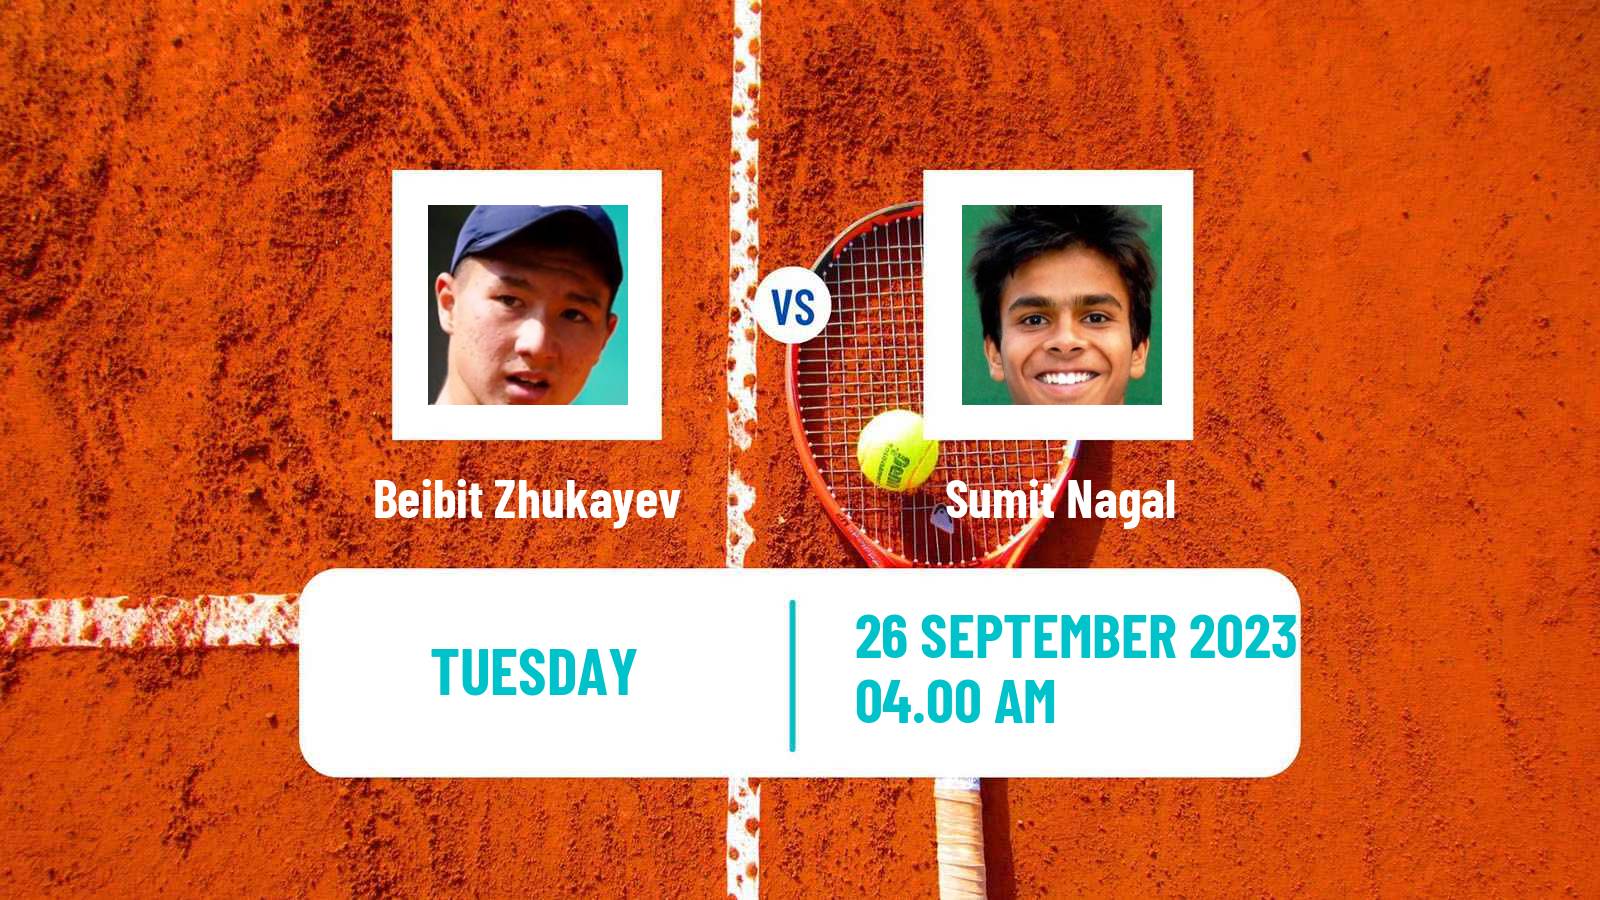 Tennis ATP Asian Games Beibit Zhukayev - Sumit Nagal